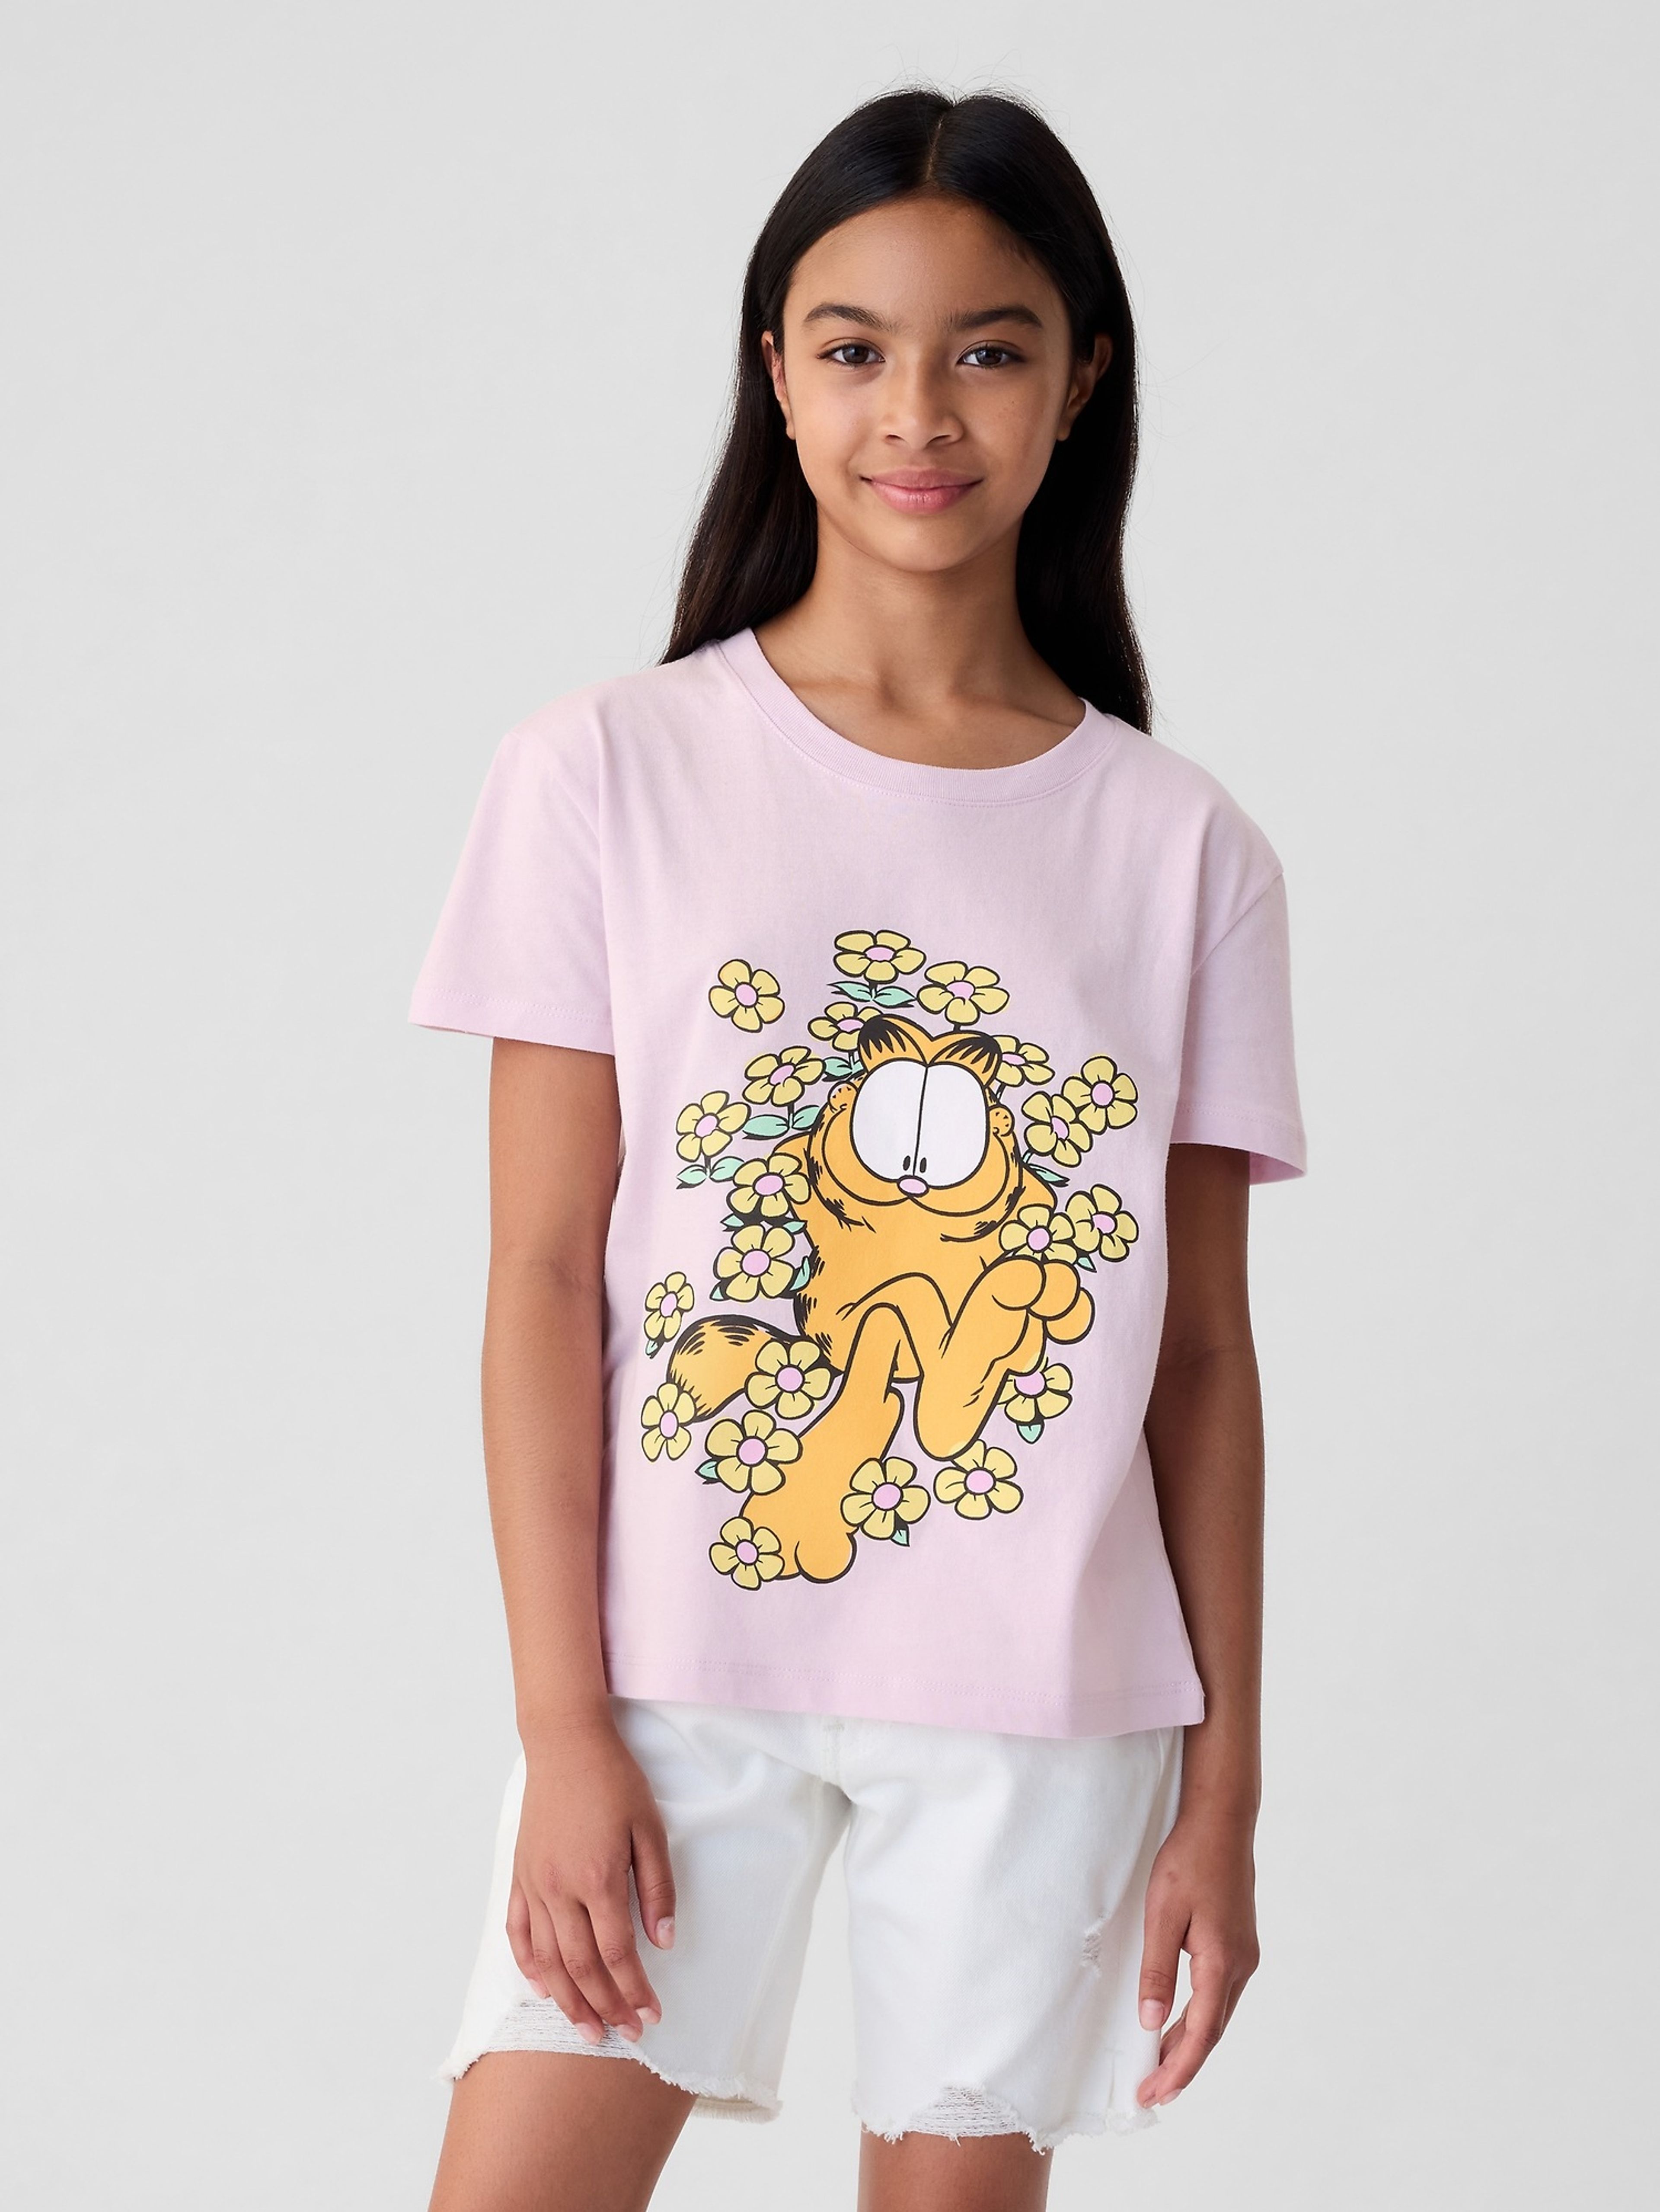 Dětské tričko GAP & Garfield